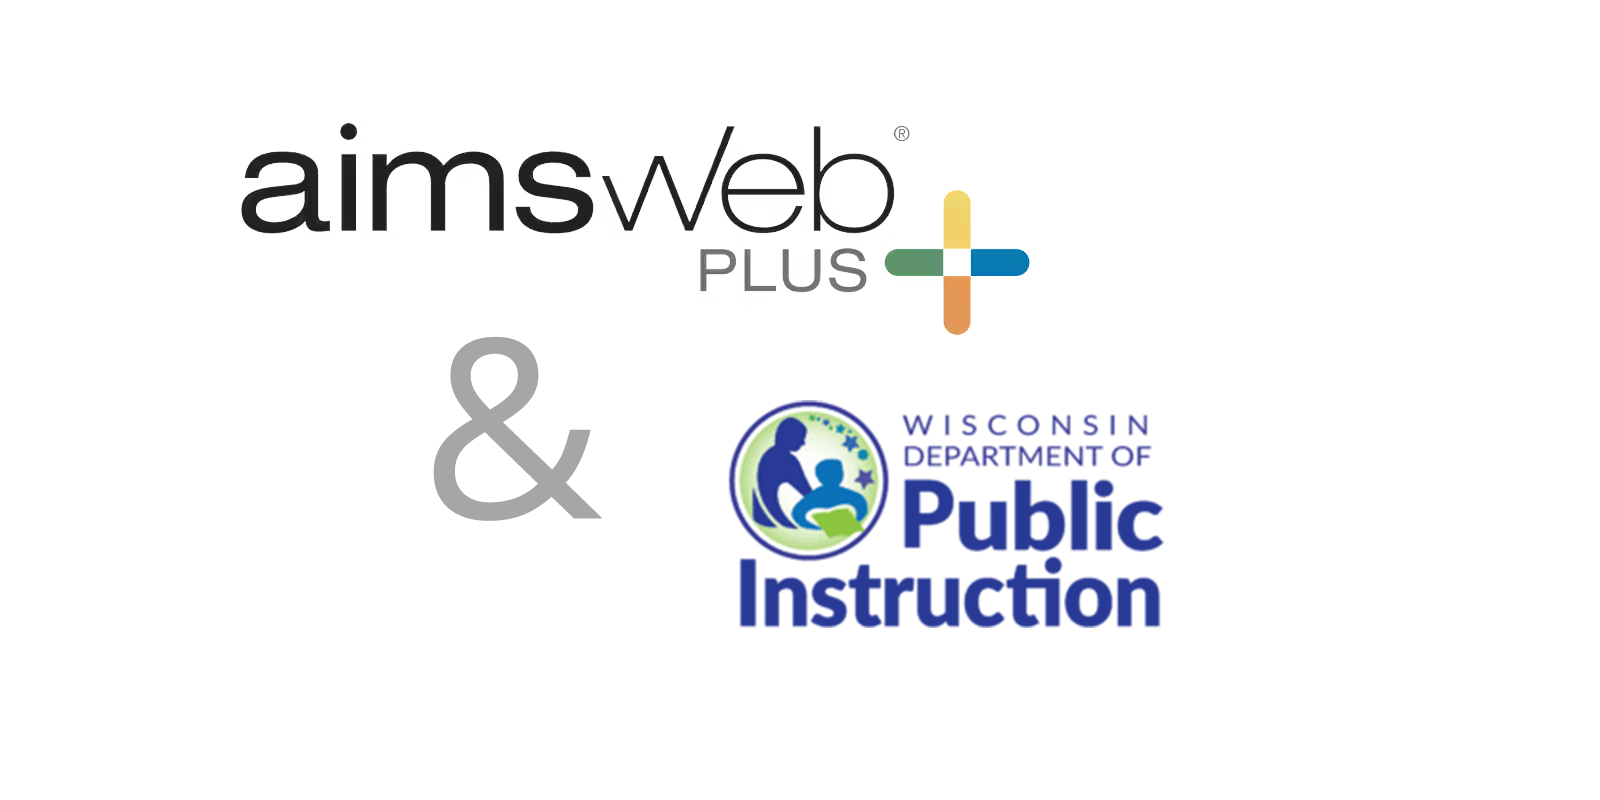 aimswebPlus Wisconsin partnership logo